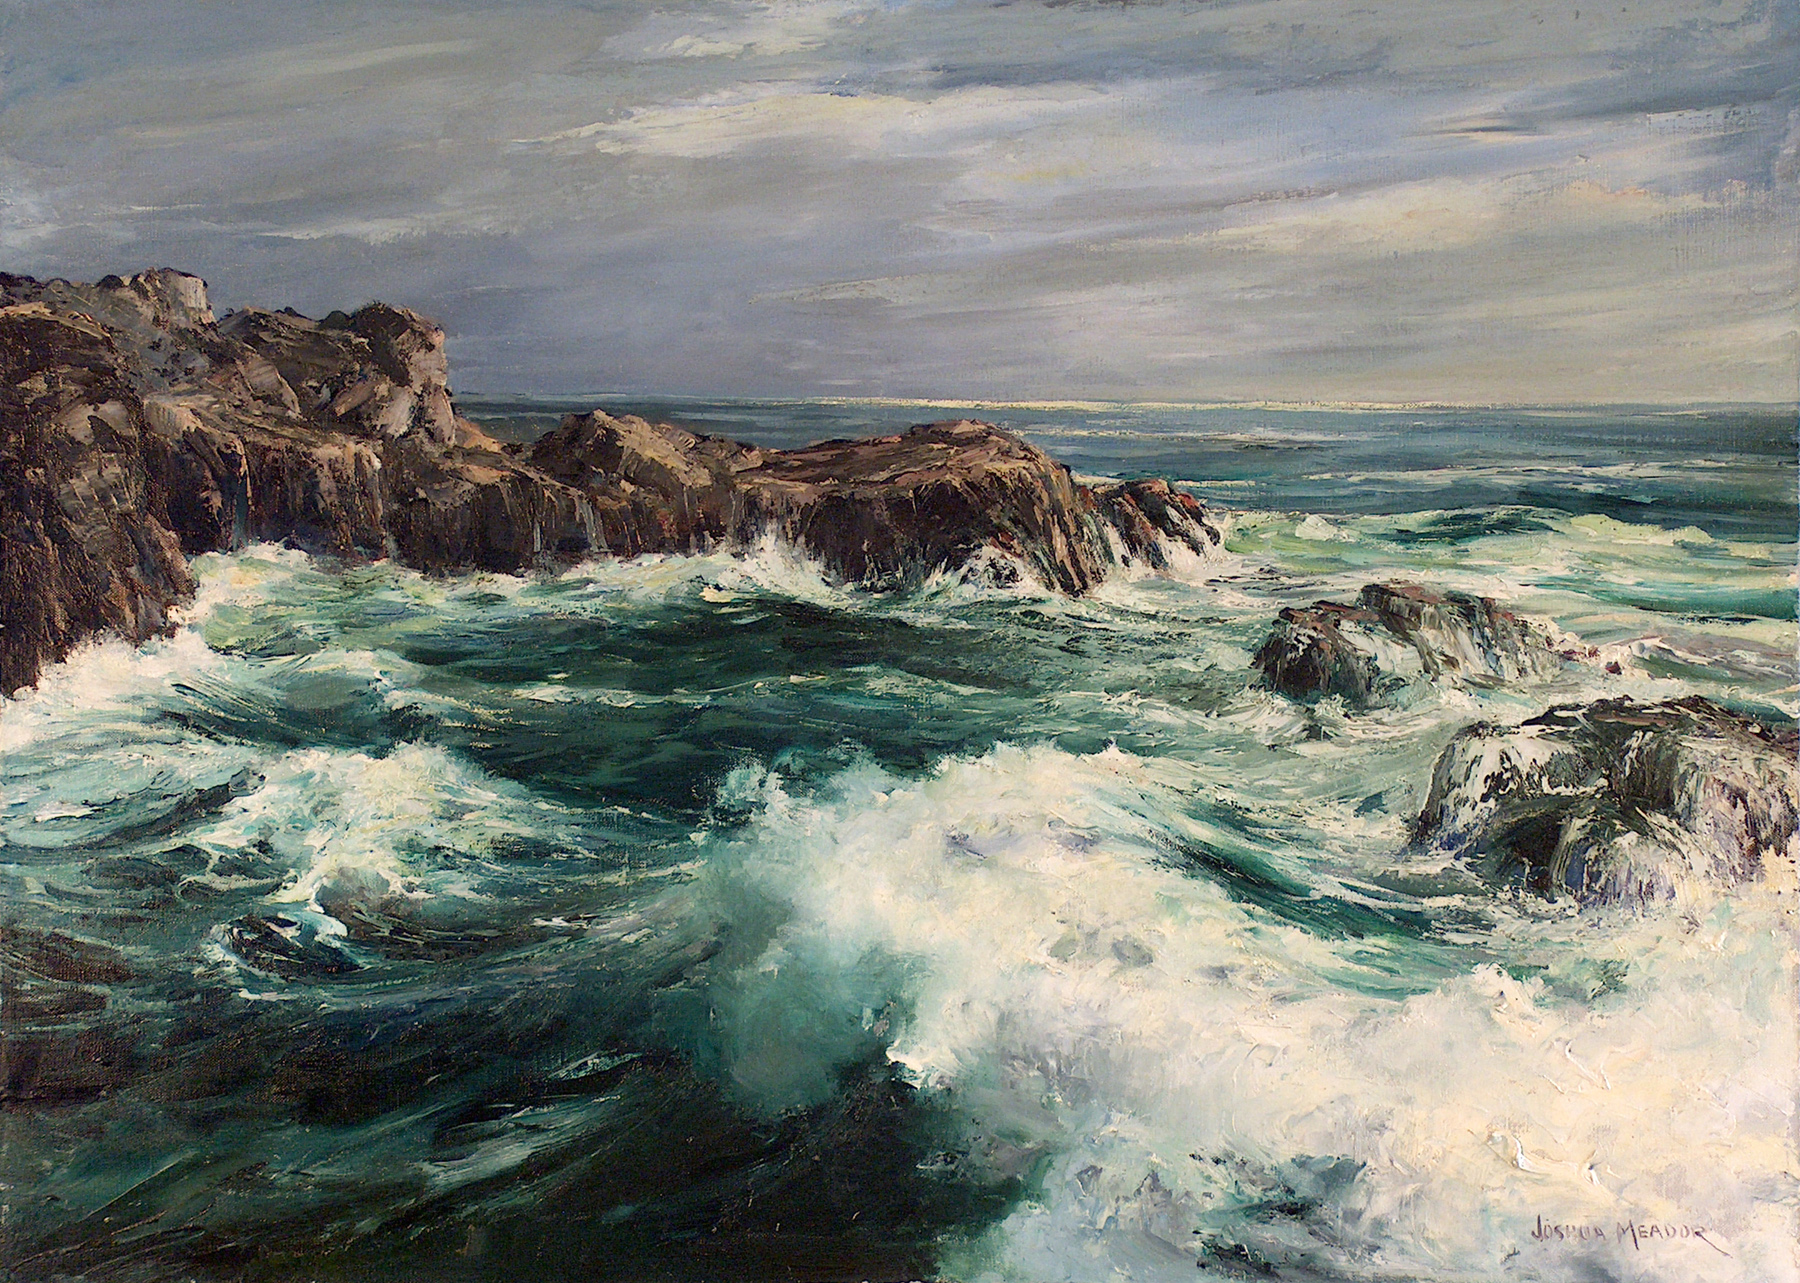 Joshua Meador Coastal Rocks and Crashing Waves Full File